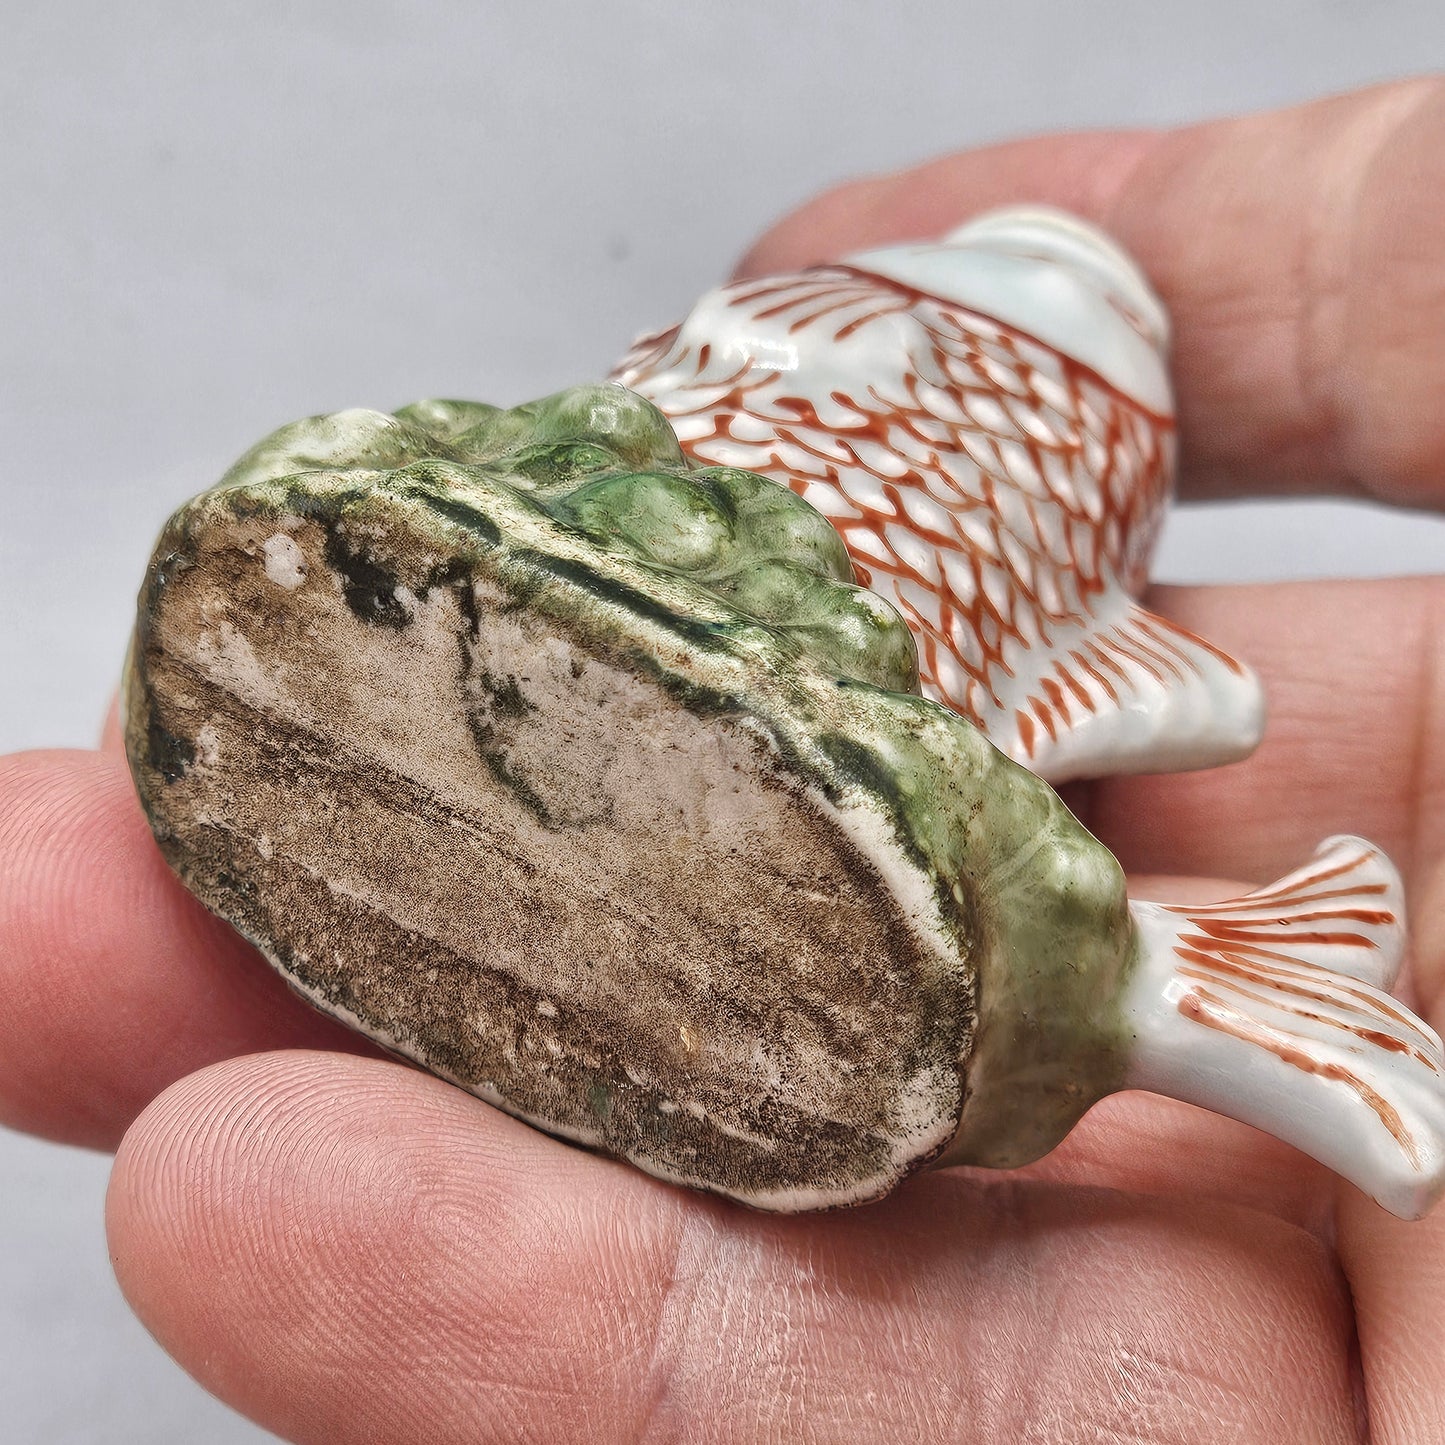 Vintage Porcelain Koi Fish Snuff Bottle